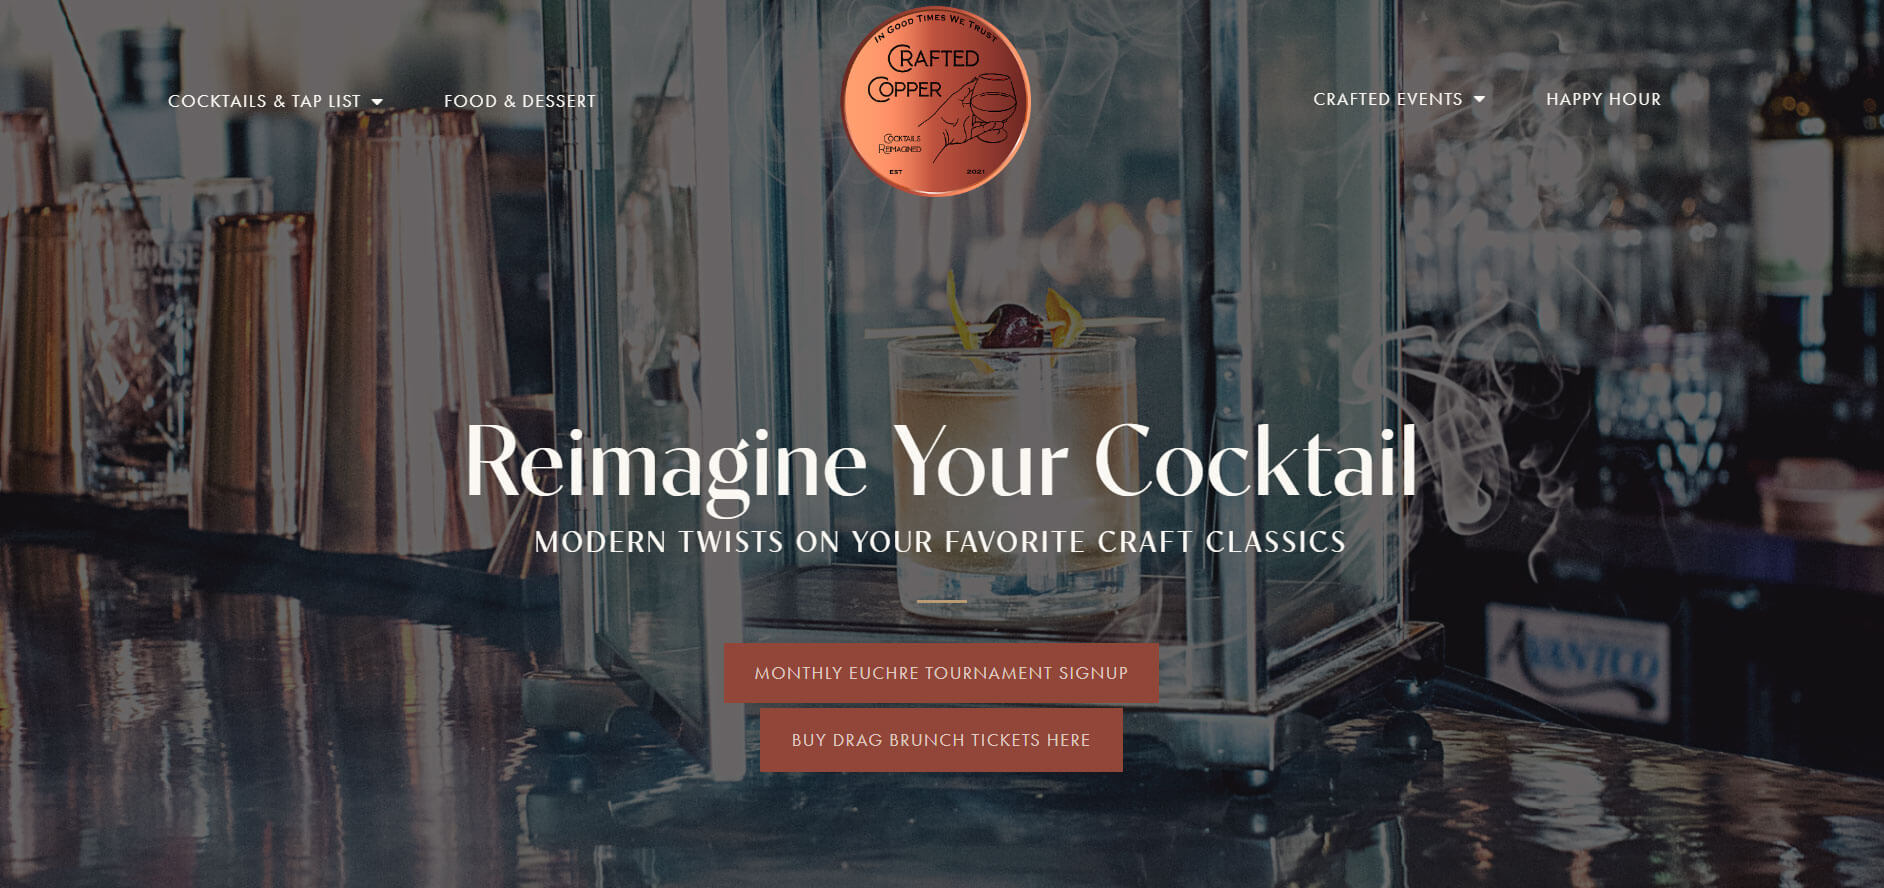 crafted-copper website screen capture